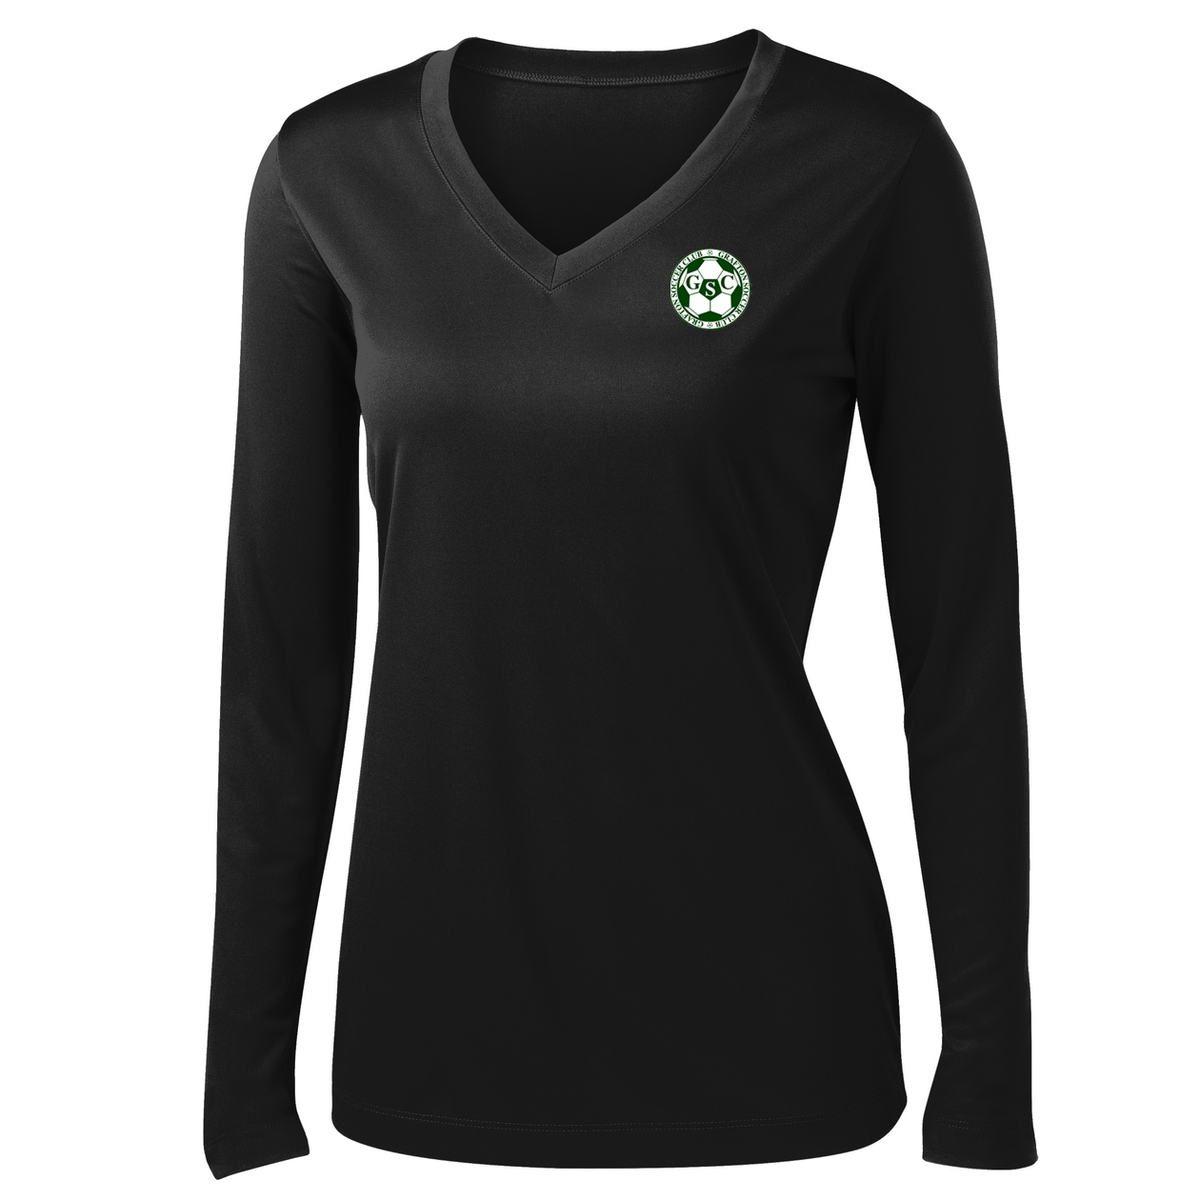 Grafton Youth Soccer Club Women's Long Sleeve Performance Shirt